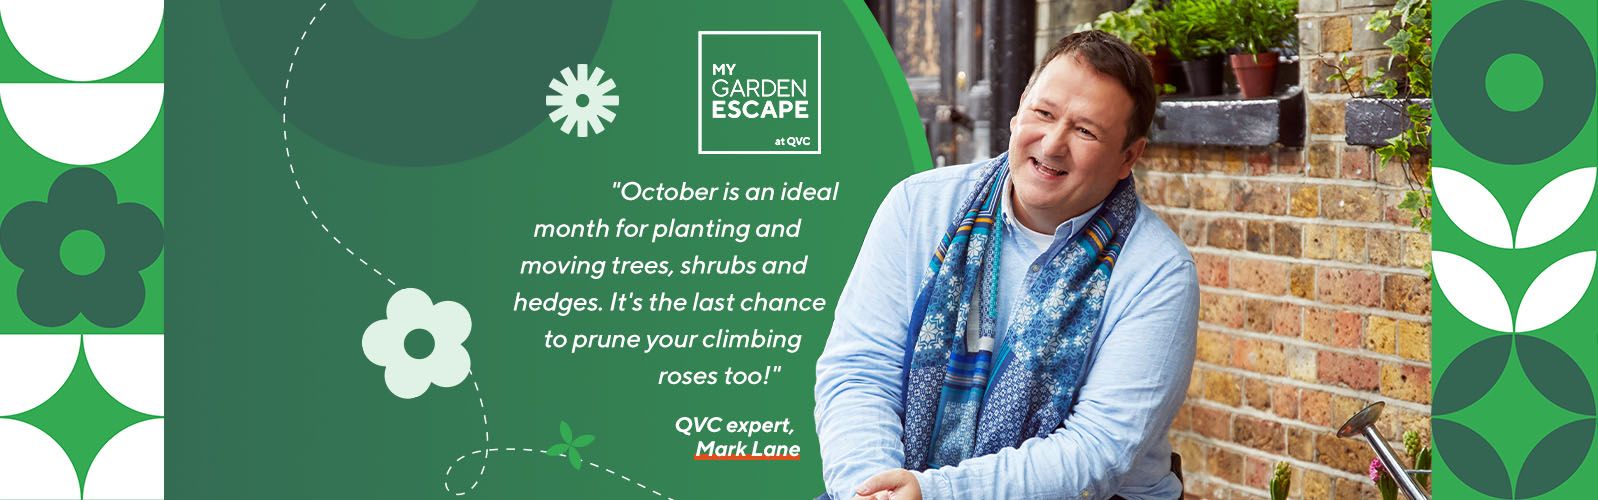 Gardening expert Mark Lane